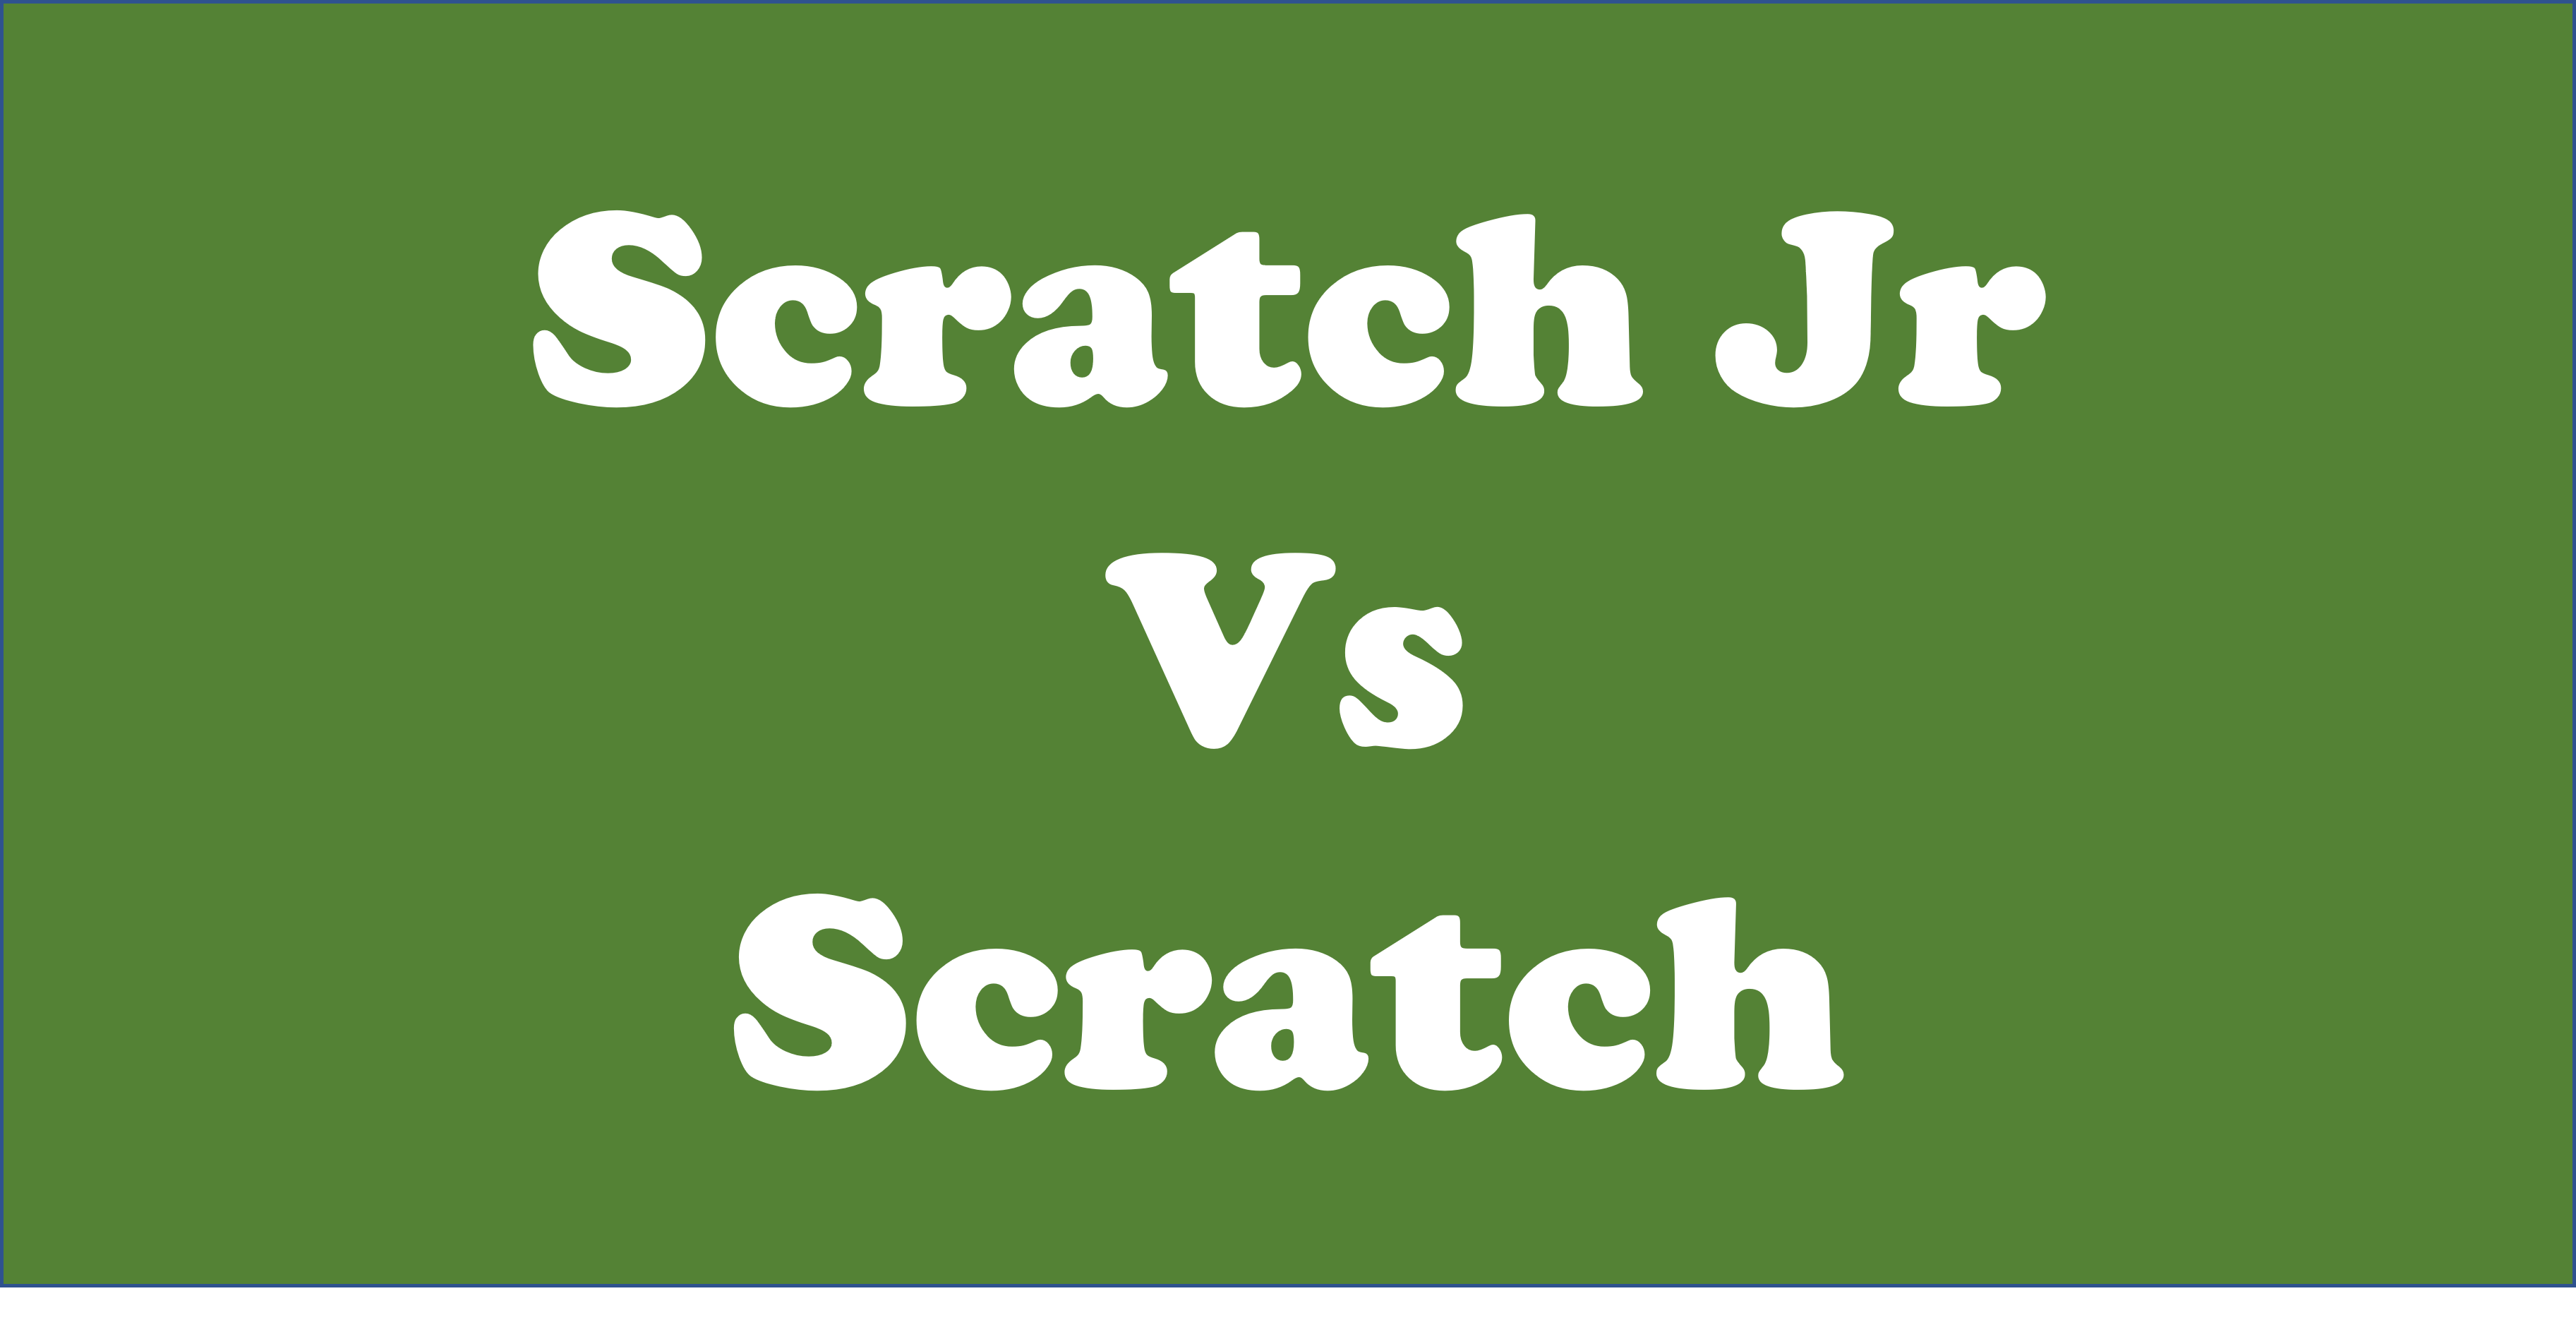 Why ScratchJR?